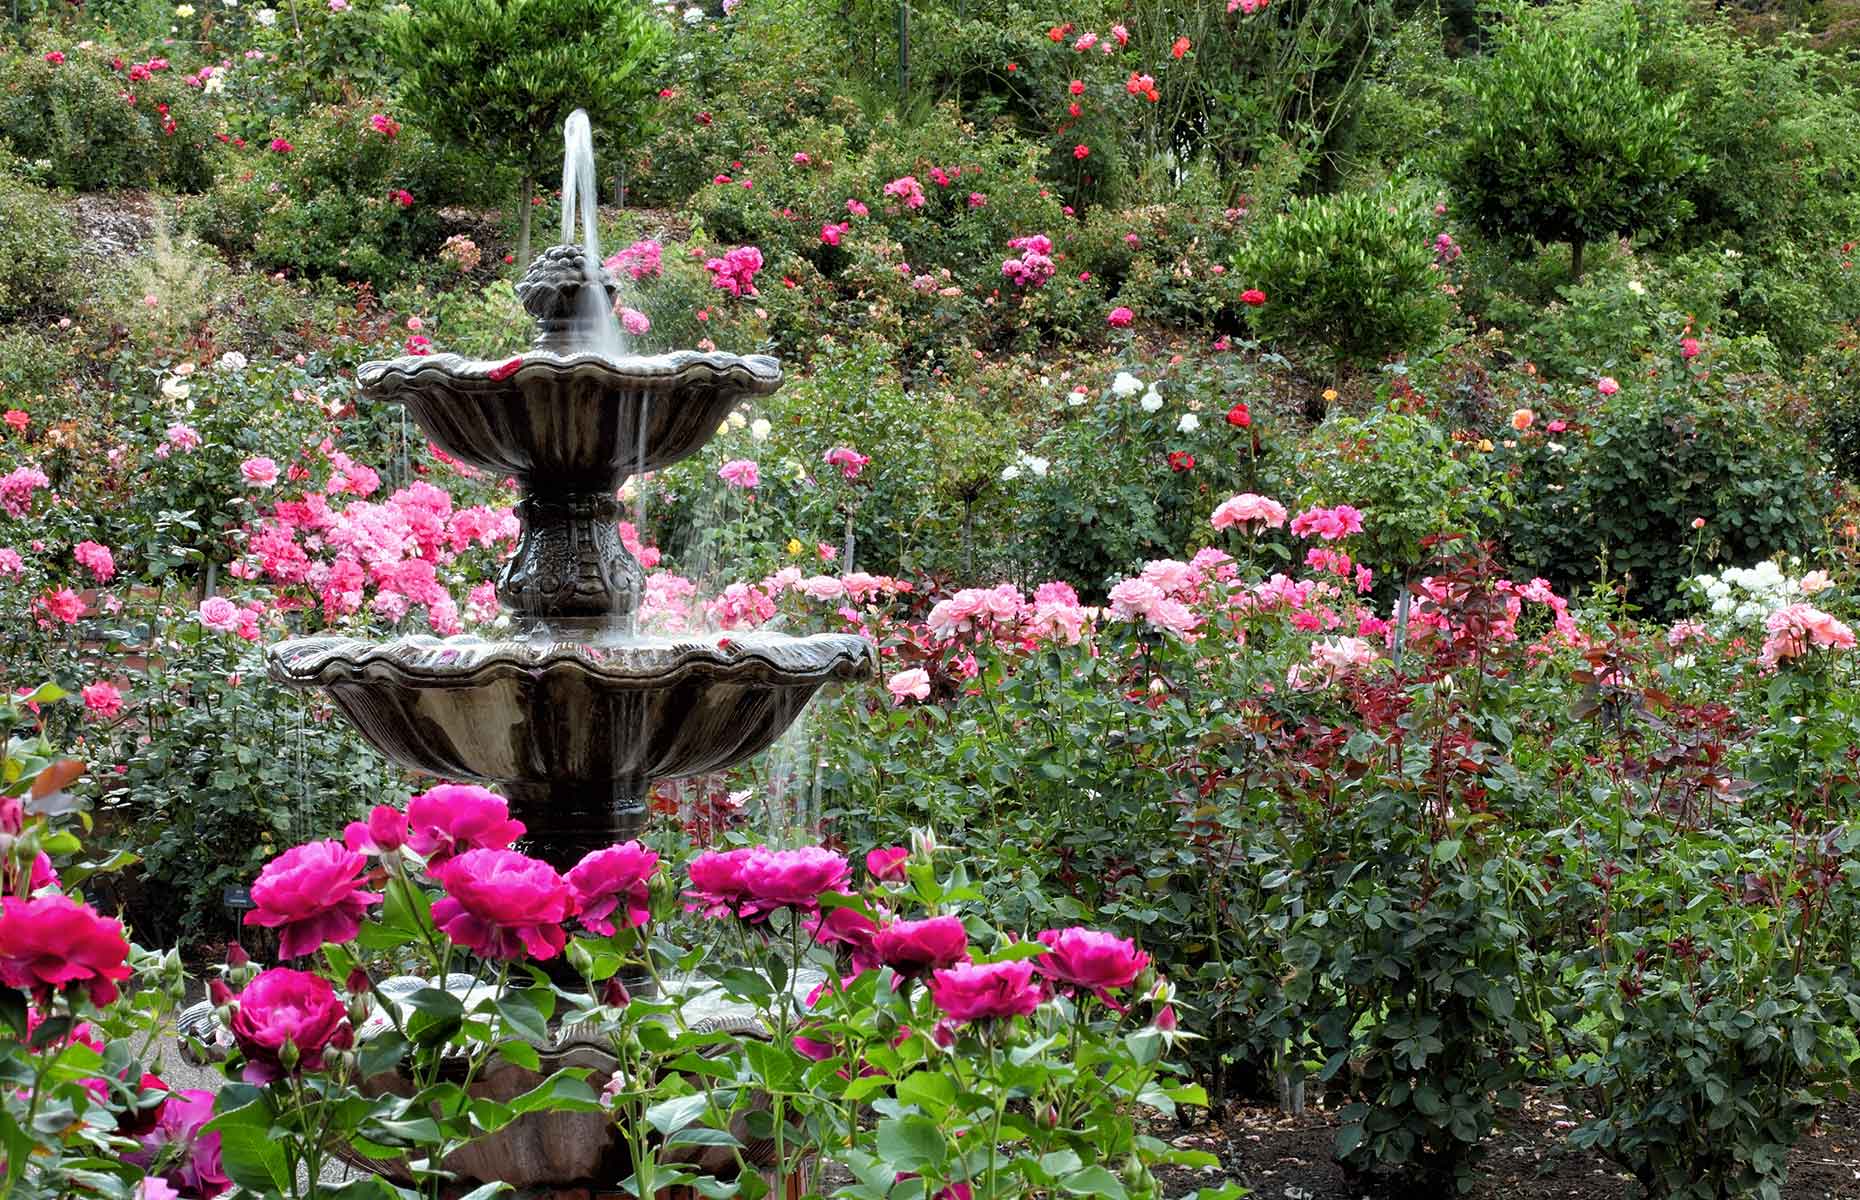 International Rose Garden, Oregon, Portland (Image: B Brown/Shutterstock)